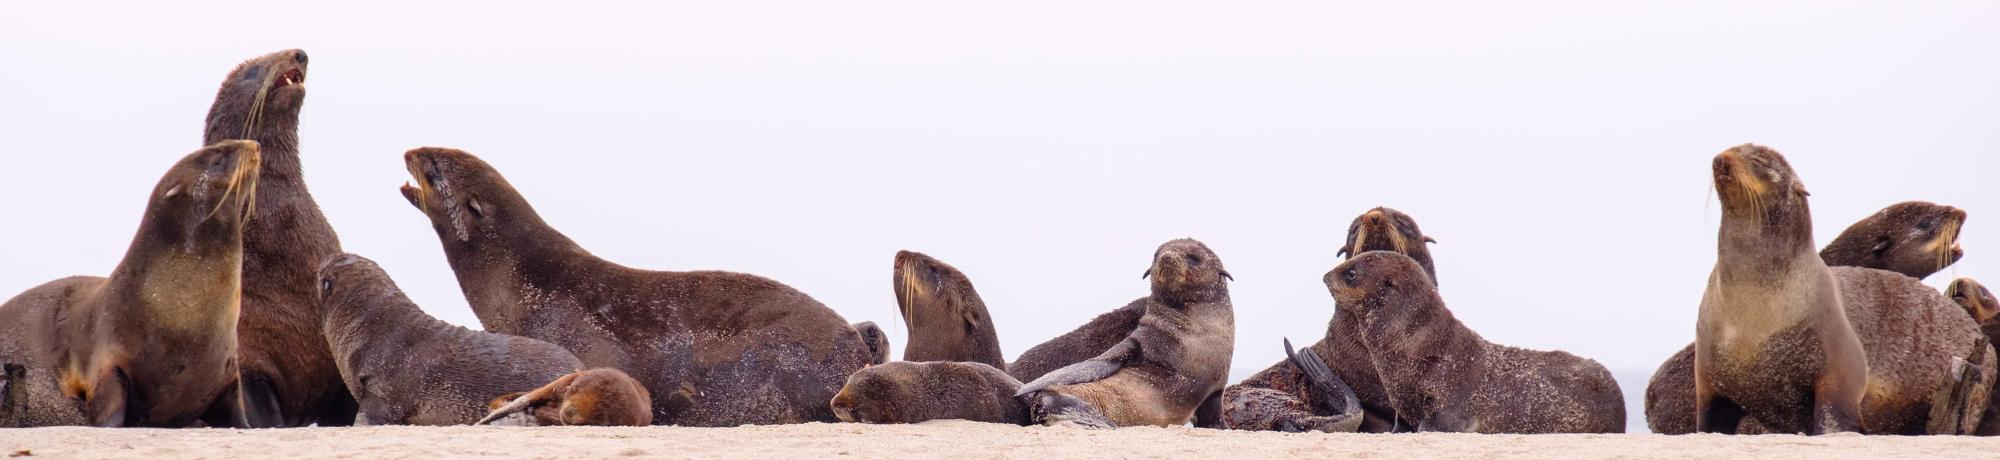 fur seals on the beach